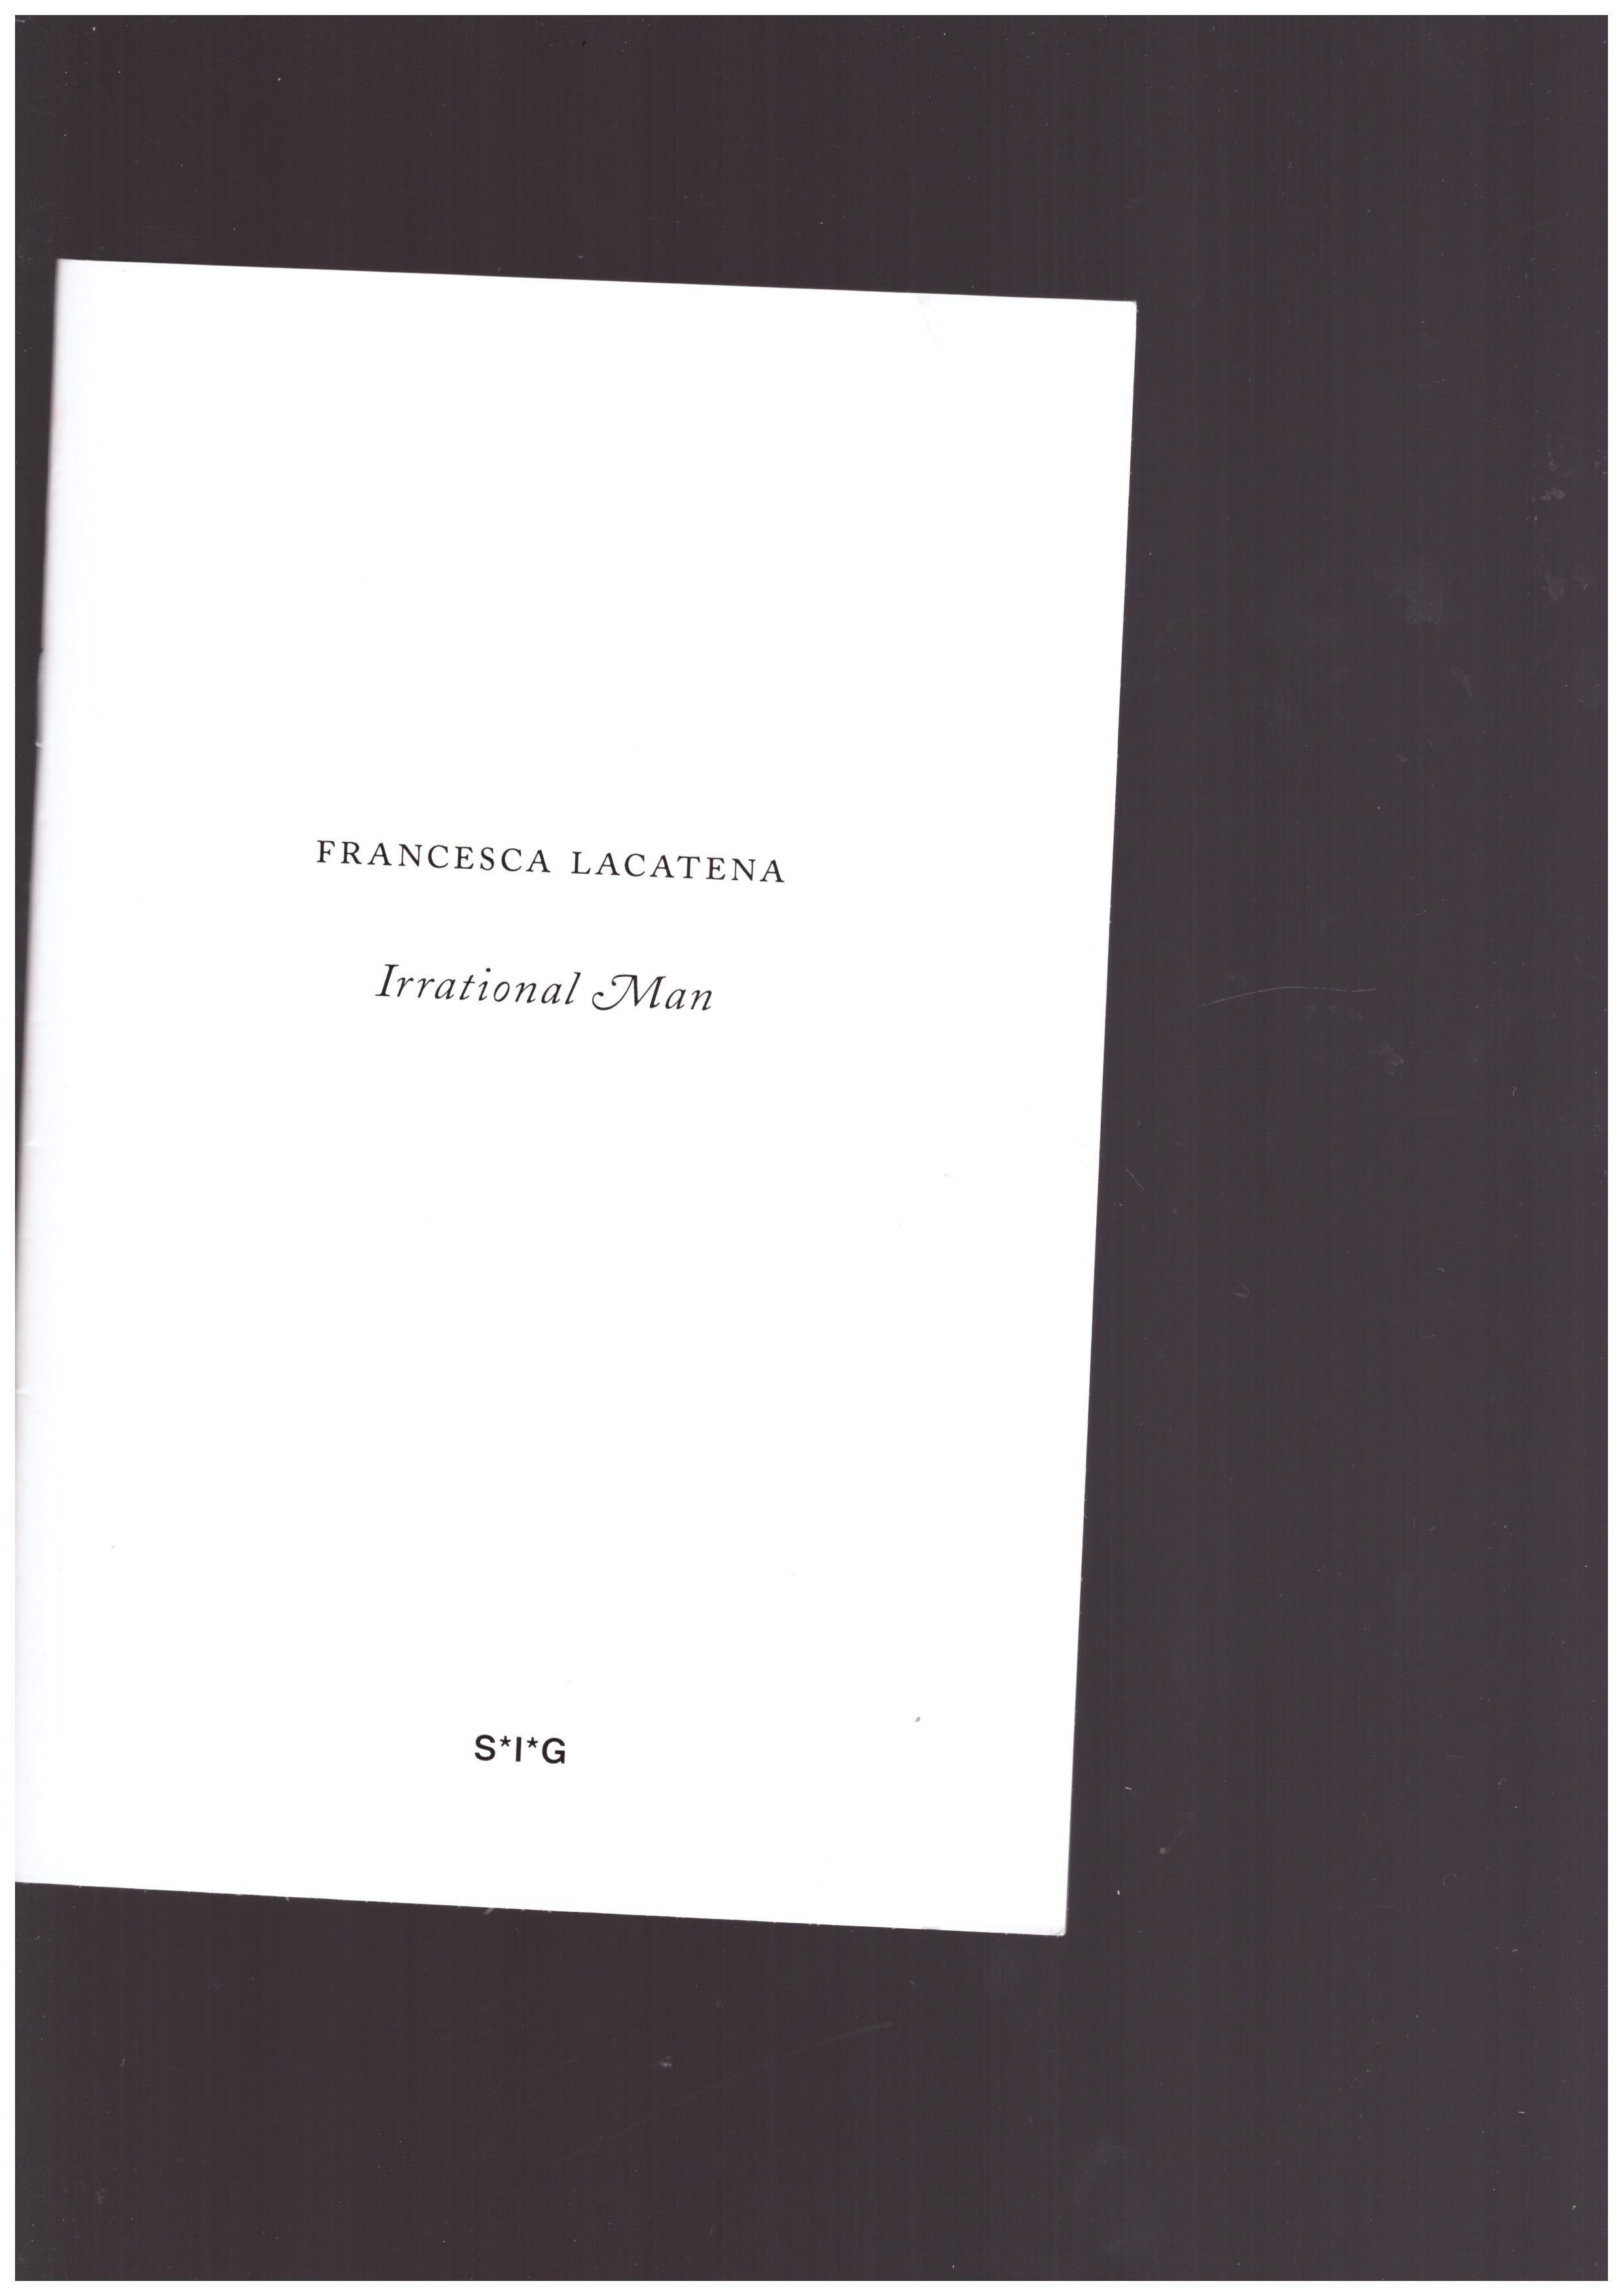 LACATERA, Francesca - Irrational Man